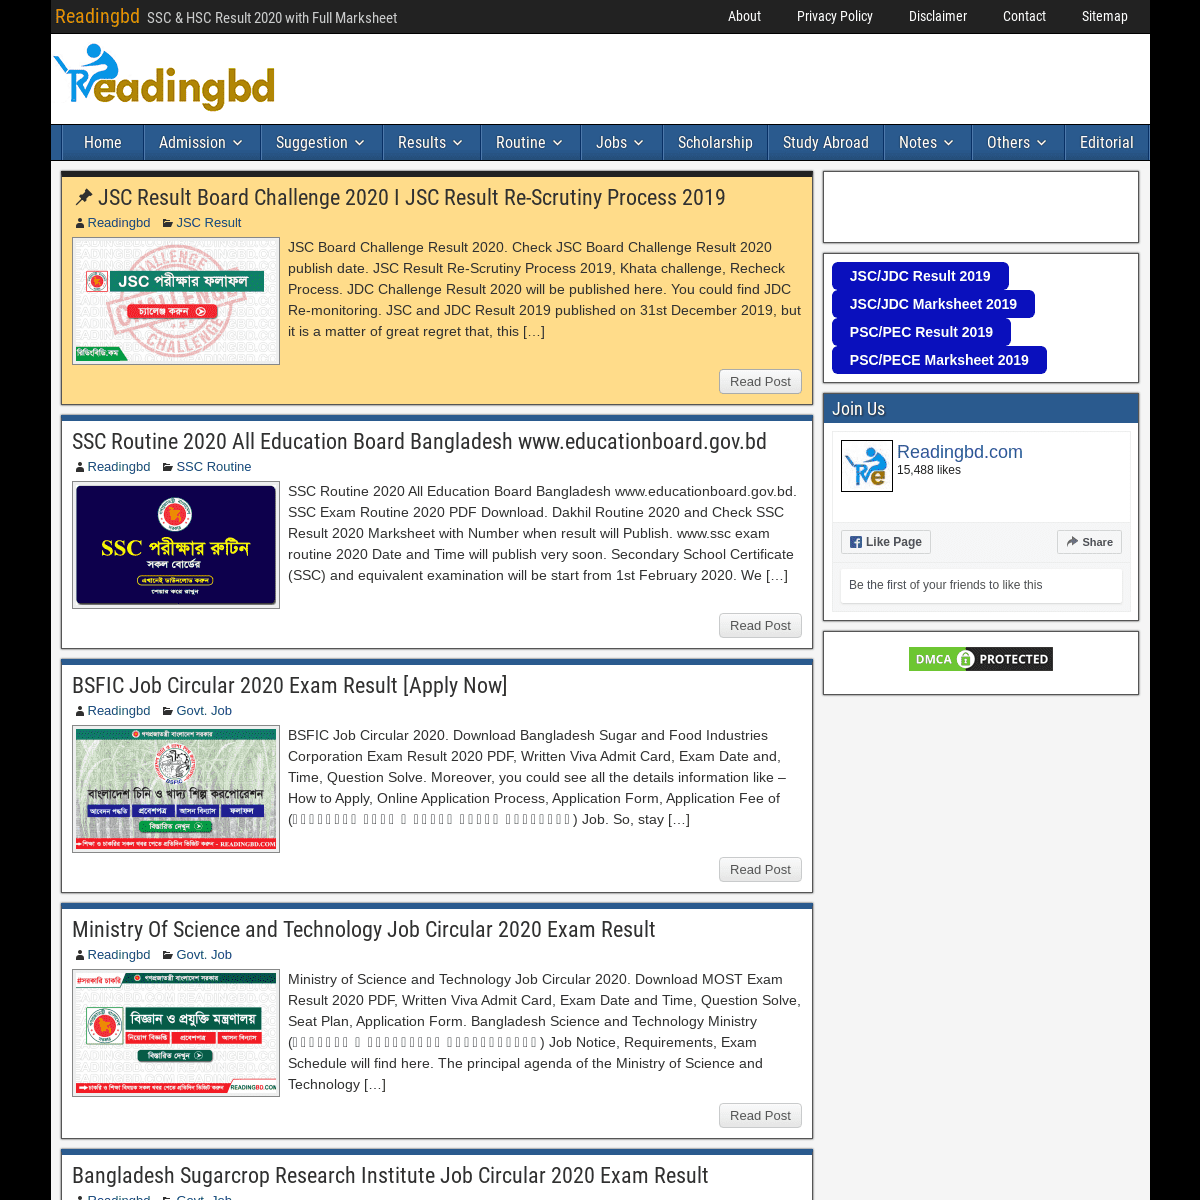 A complete backup of readingbd.com